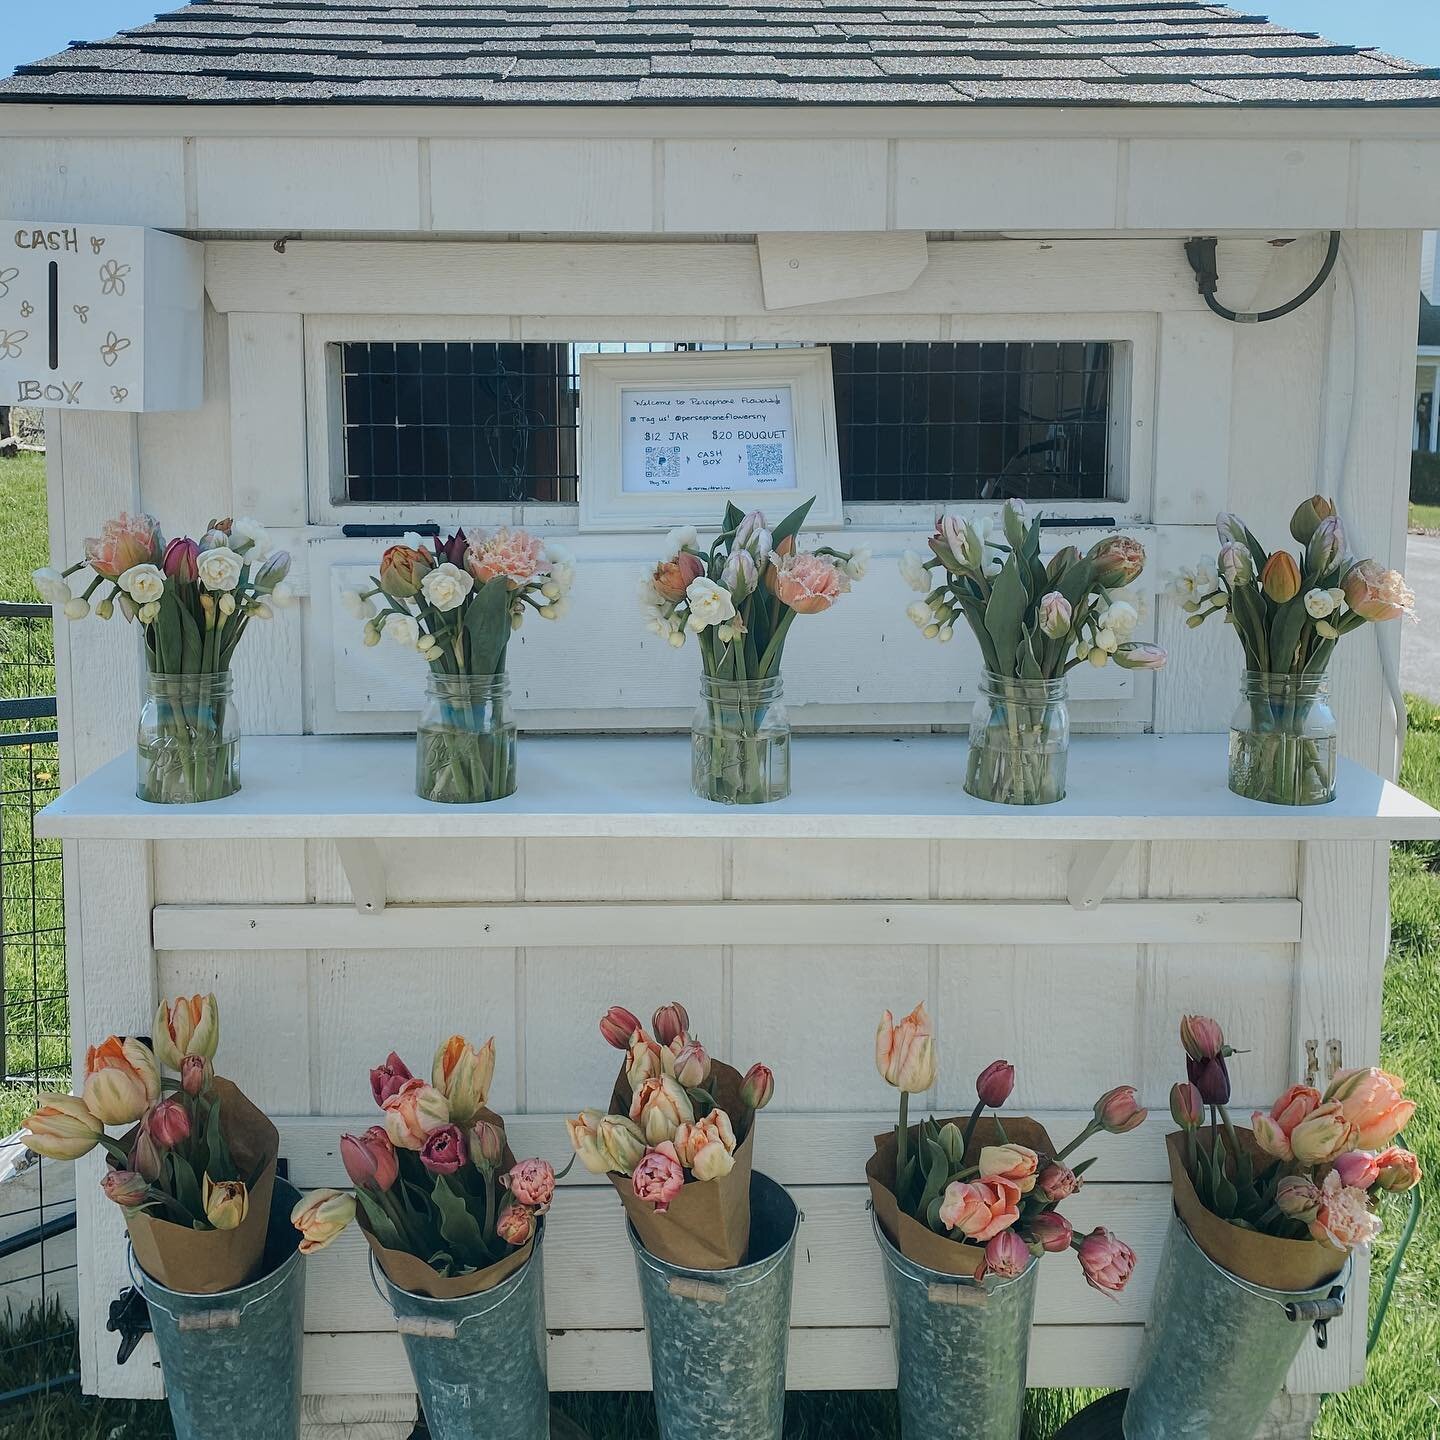 🌷TULIP SALE TODAY!🌷

$12 Mason Jar Bouquets
$20 Wrap Bouquets

Fragrant, fringed, &amp; ruffly in all the prettiest pastels!

#springflowers #flowerstand #roadsidestand #cantonny #growninny #localflowers #seasonalflowers